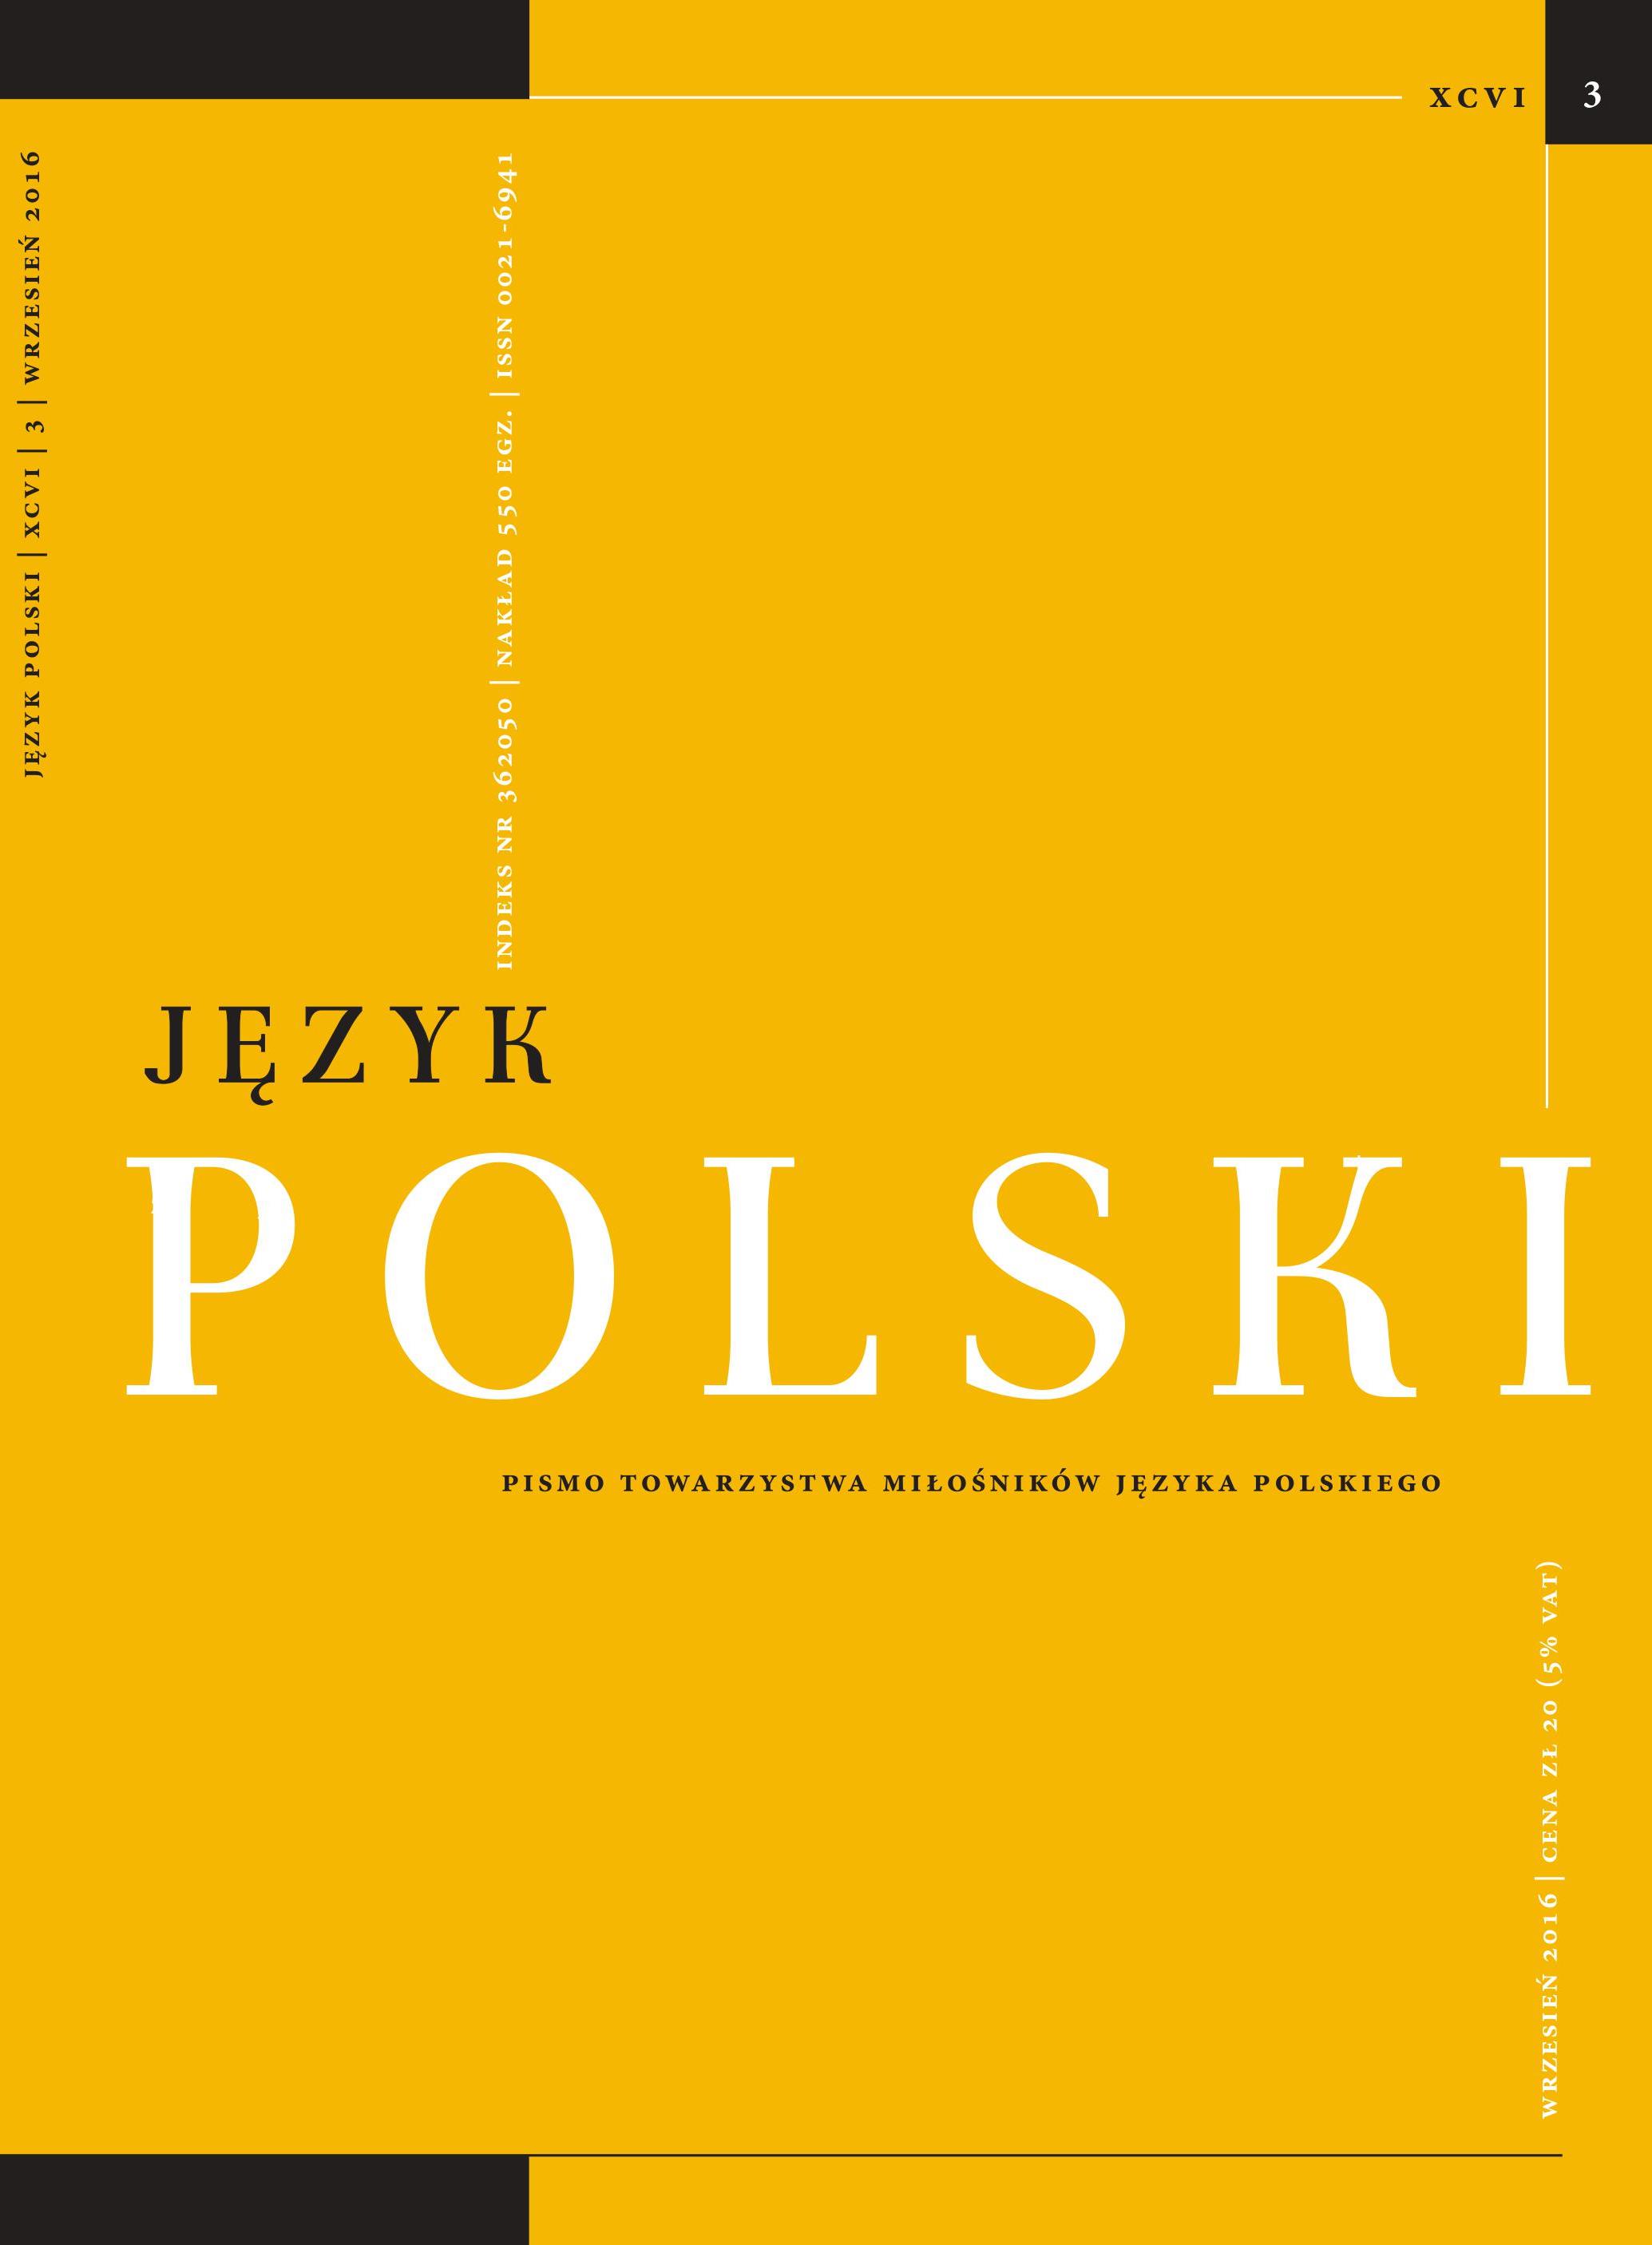 Gbury, dziwki, patole, zwyrole i ćwoki (‘kerns’, ‘wenches’, ‘lowlives’ & ‘nobs’) – about successful career of some quasi-vernacular Polish expressivisms Cover Image